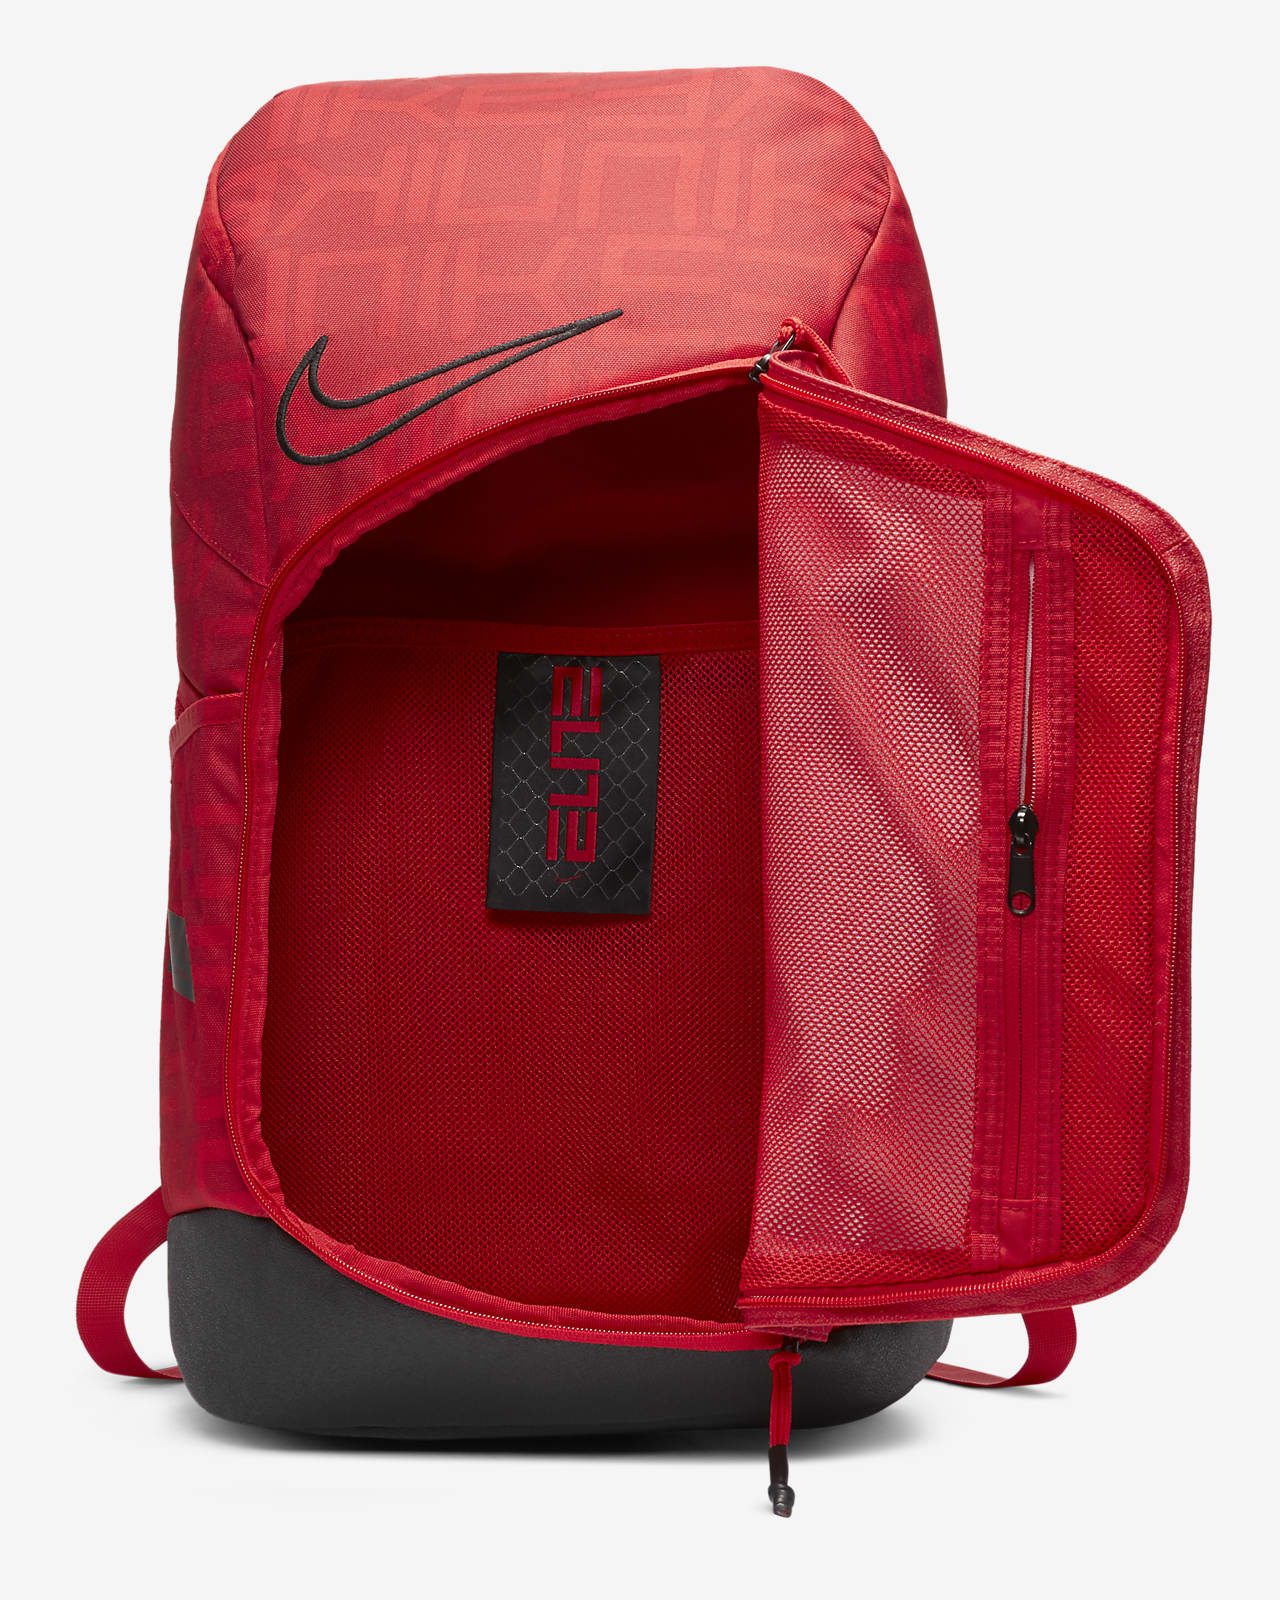 nike elite backpack red and black